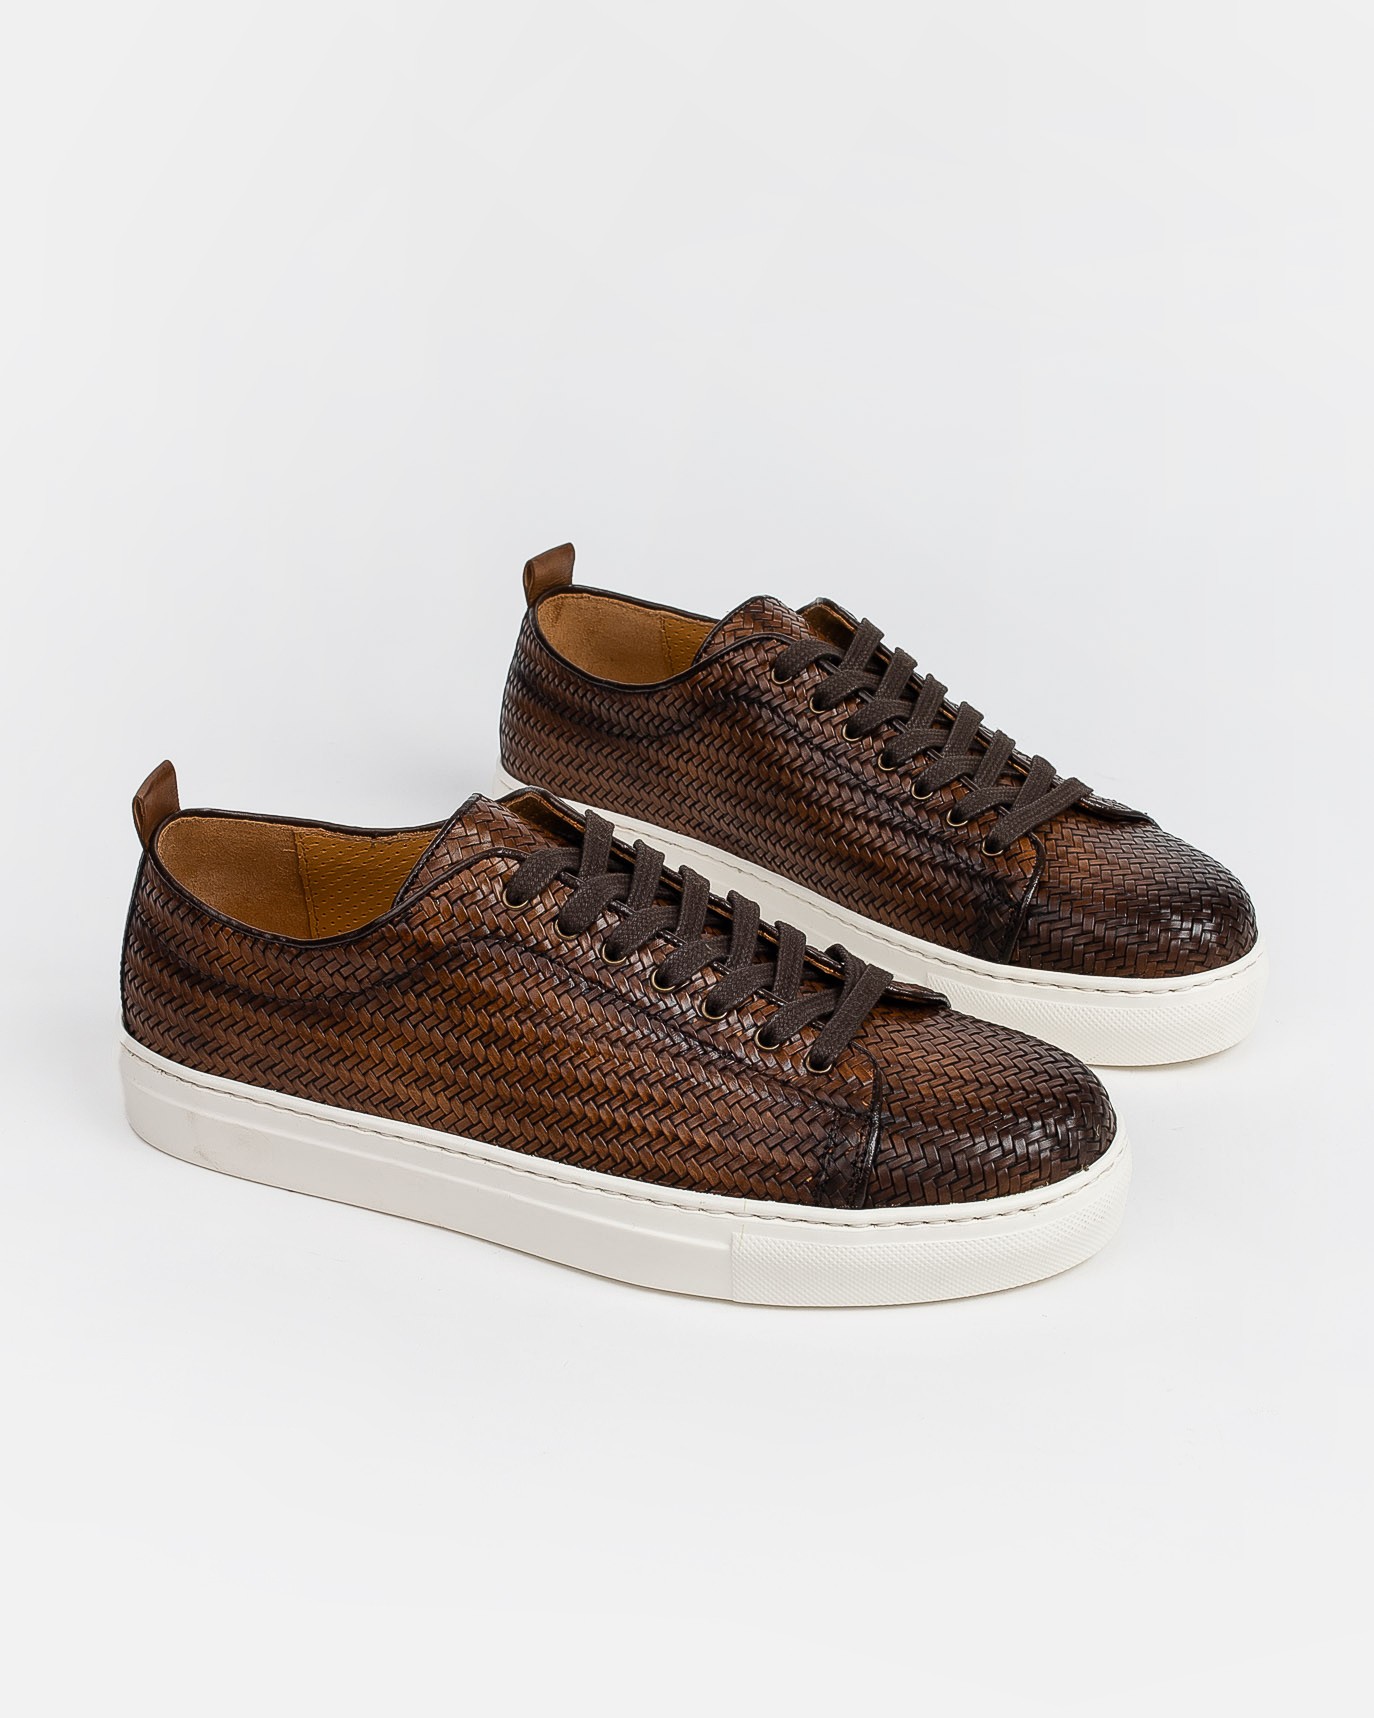 calce-zapatillas-magnum-gold-sneakers-brown-marron (5)